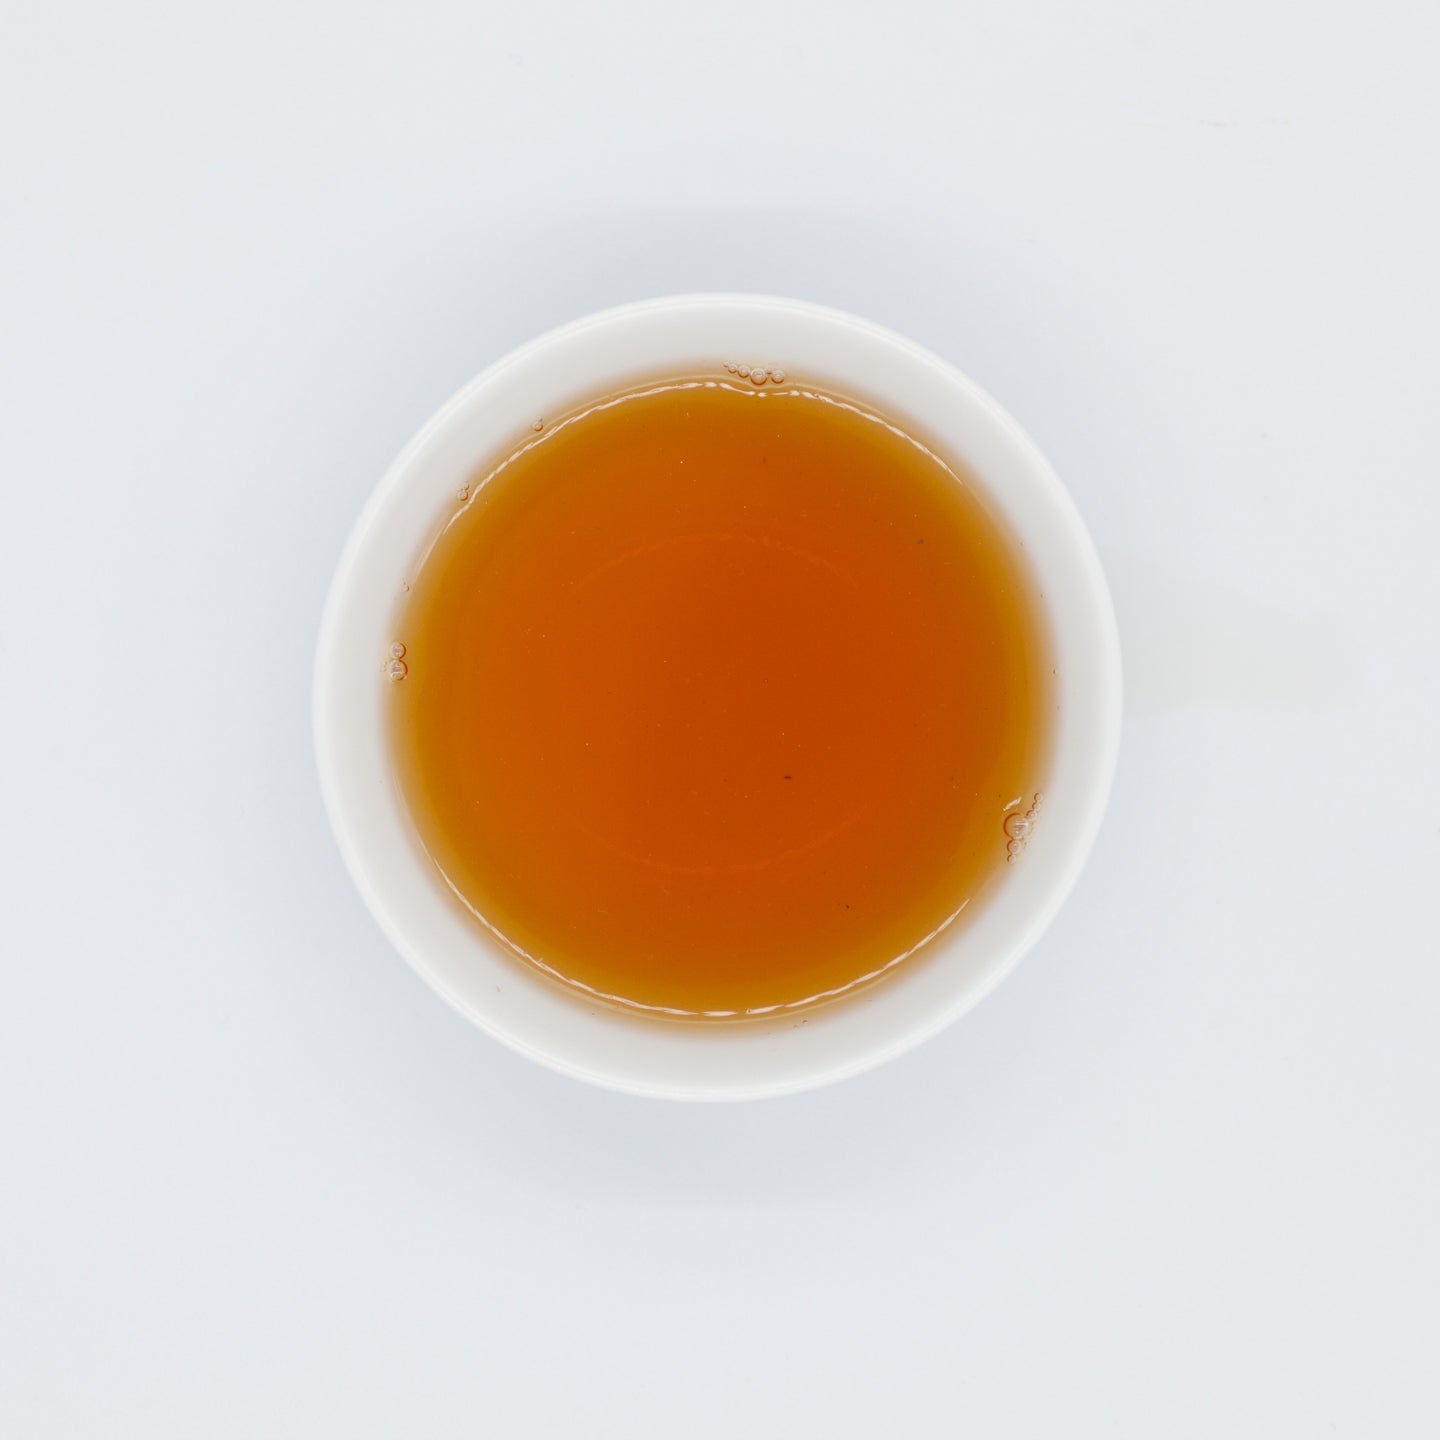 Benifuki black tea from BROO - Craft Tea from Japan. Single-origin, small-batch, pesticide-free tea grown in Yame, Fukuoka. BROO - Craft Tea from Japan - Pesticide-free Benifuki black tea from Yame, Fukuoka, Japan, in sustainable packaging. べにふうき紅茶